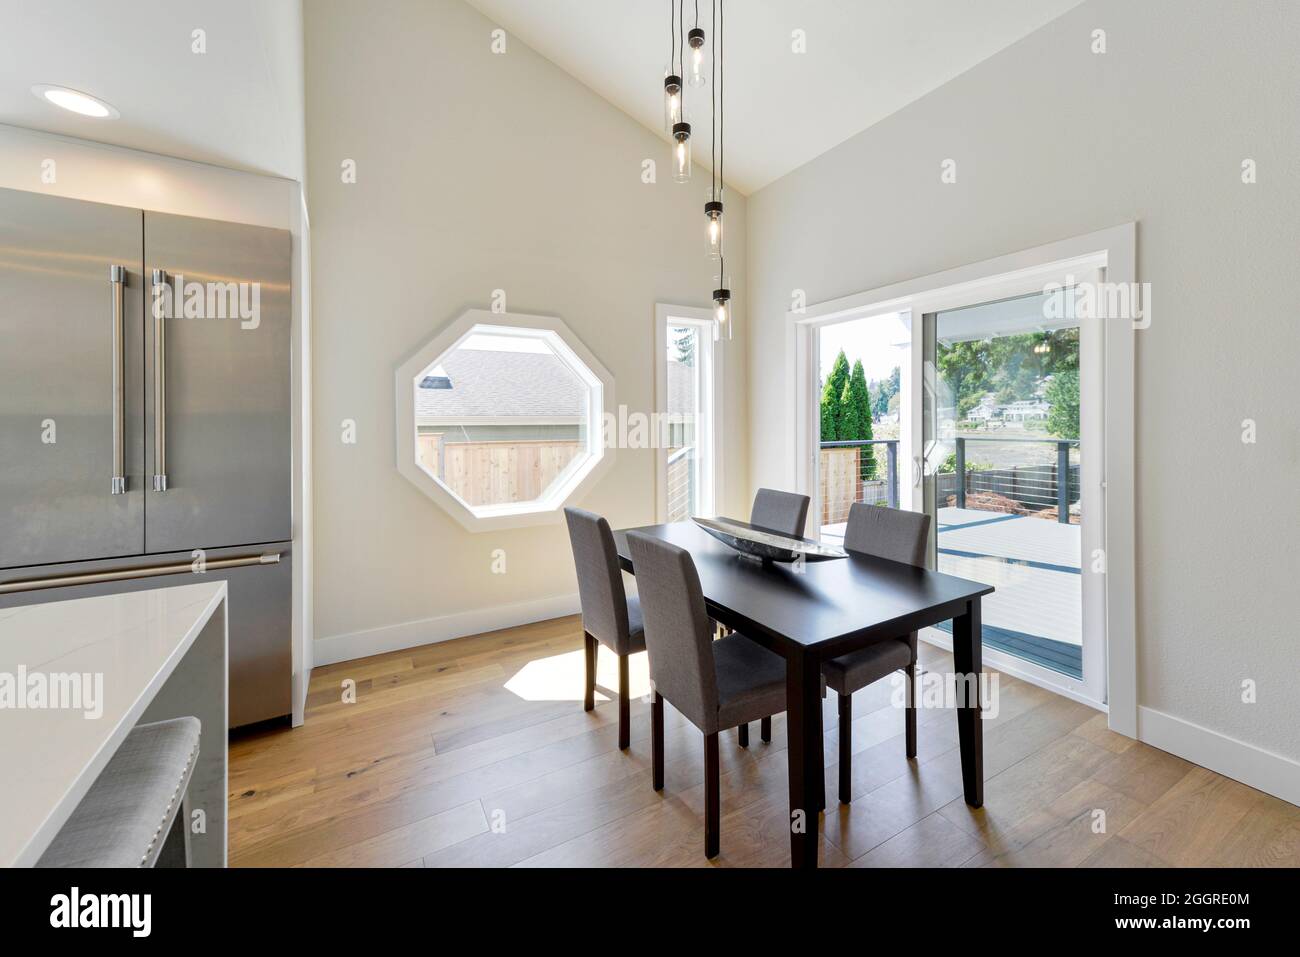 Moderno comedor interior residencial Foto de stock